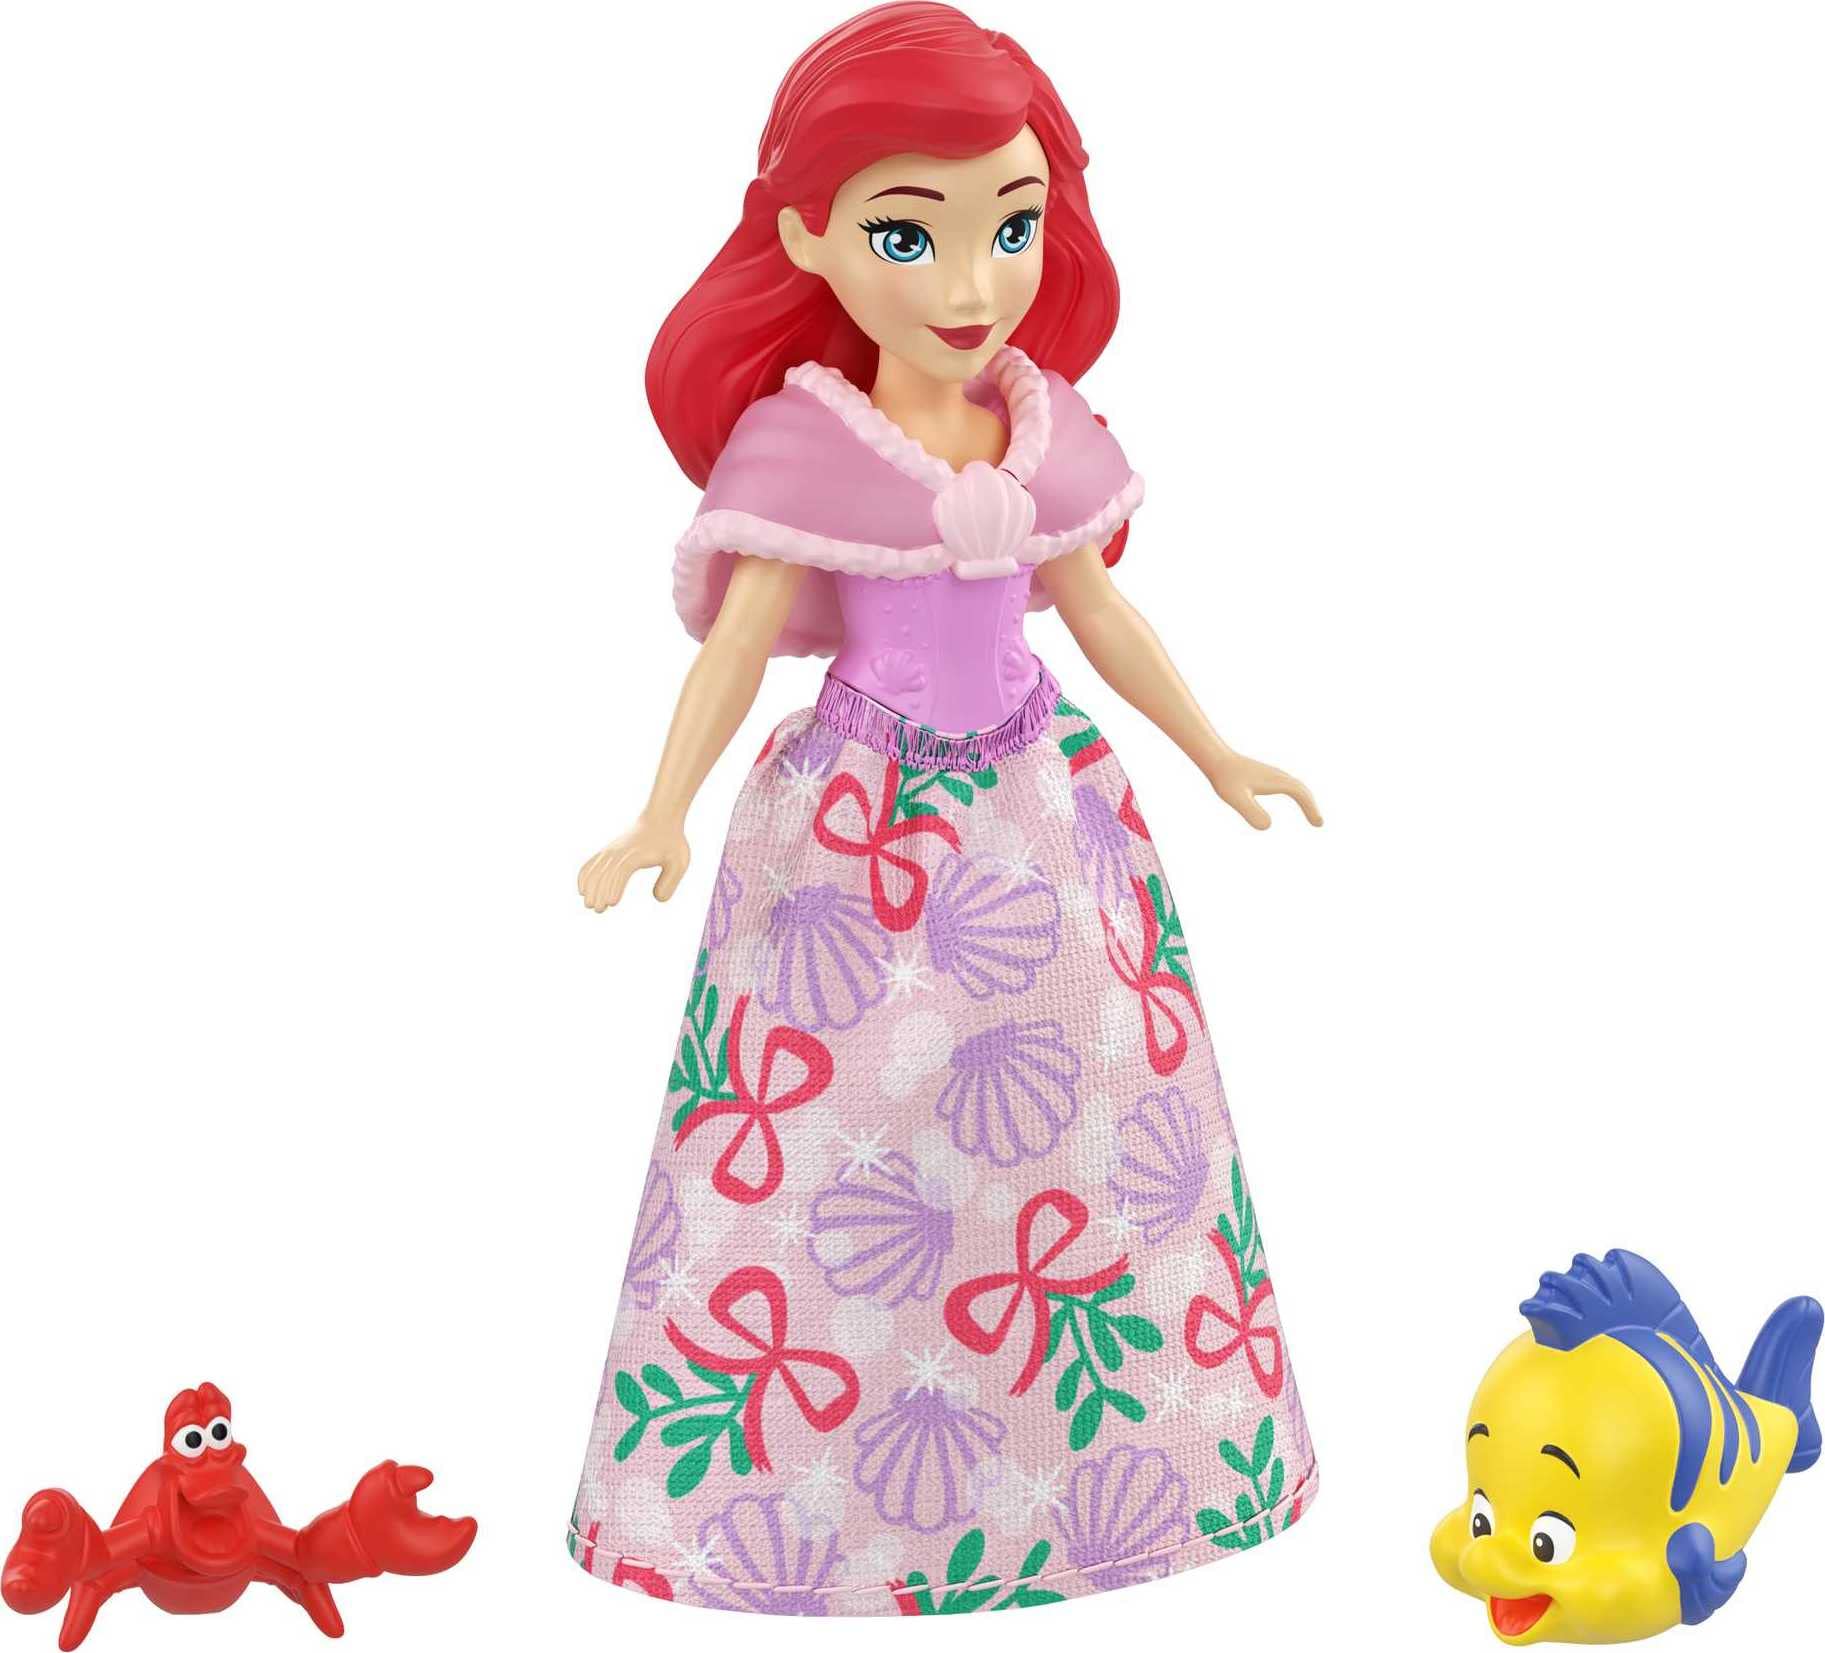 Disney Princess Advent Calendar, 24 Days of Surprises Include 4 Princess Small Dolls, 5 Friends & 16 Accessories (Amazon Exclusive)